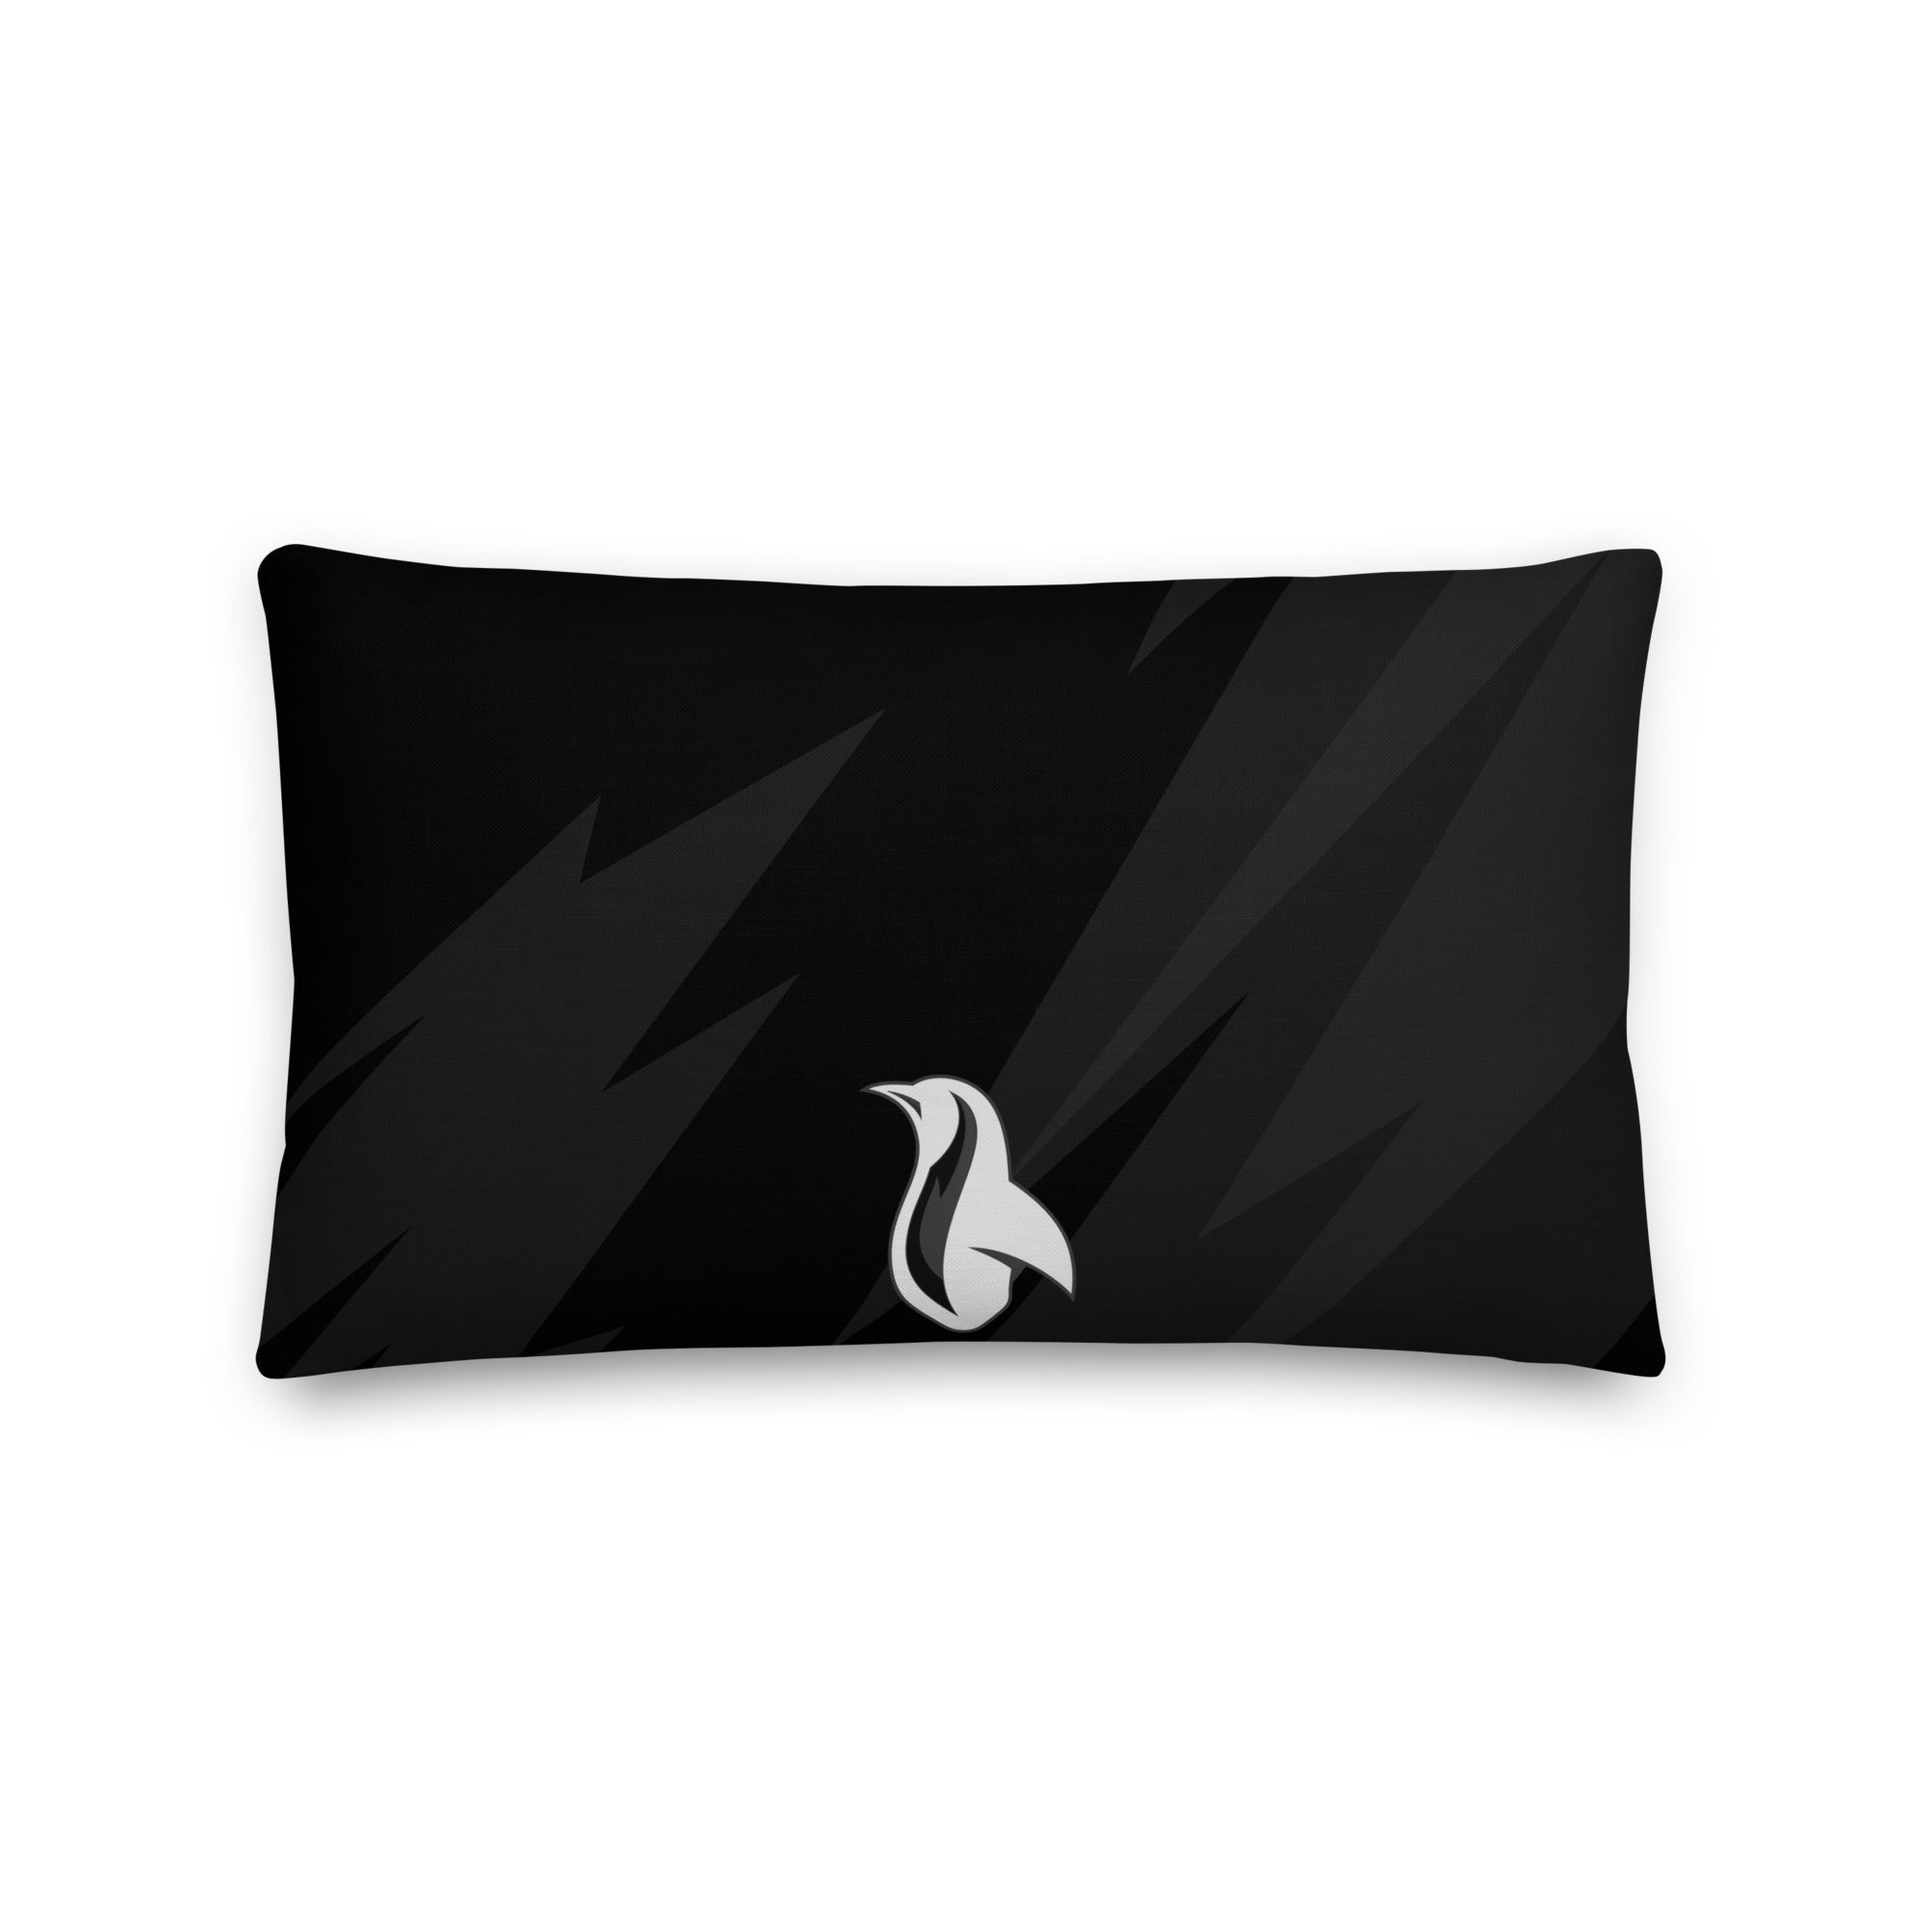 Baseball Bat Premium Pillow